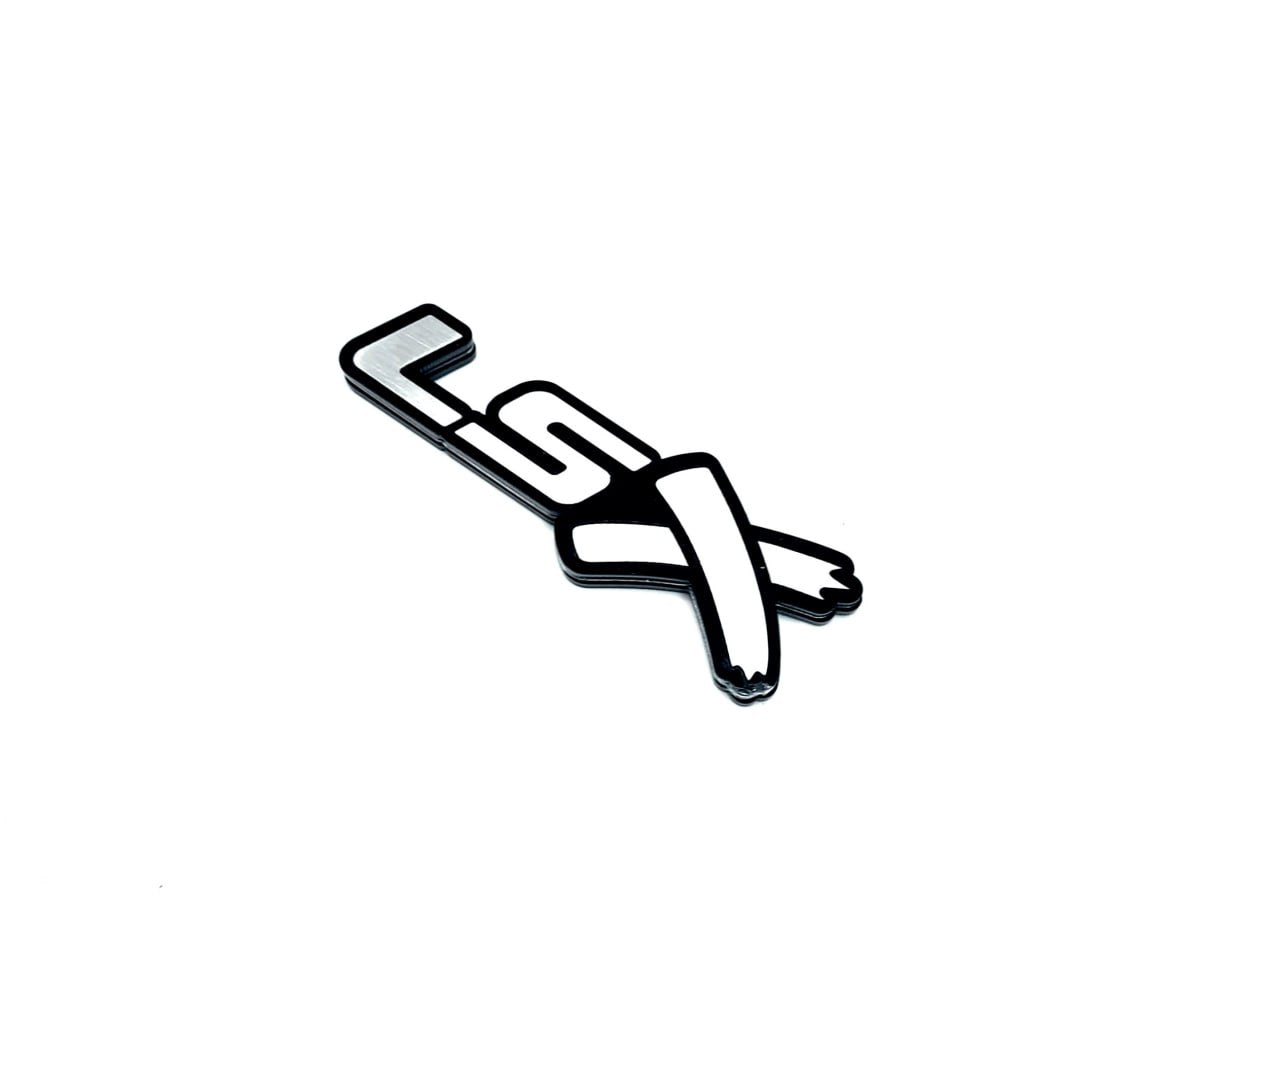 Chevrolet emblem for fenders with LSX logo (Type 2)